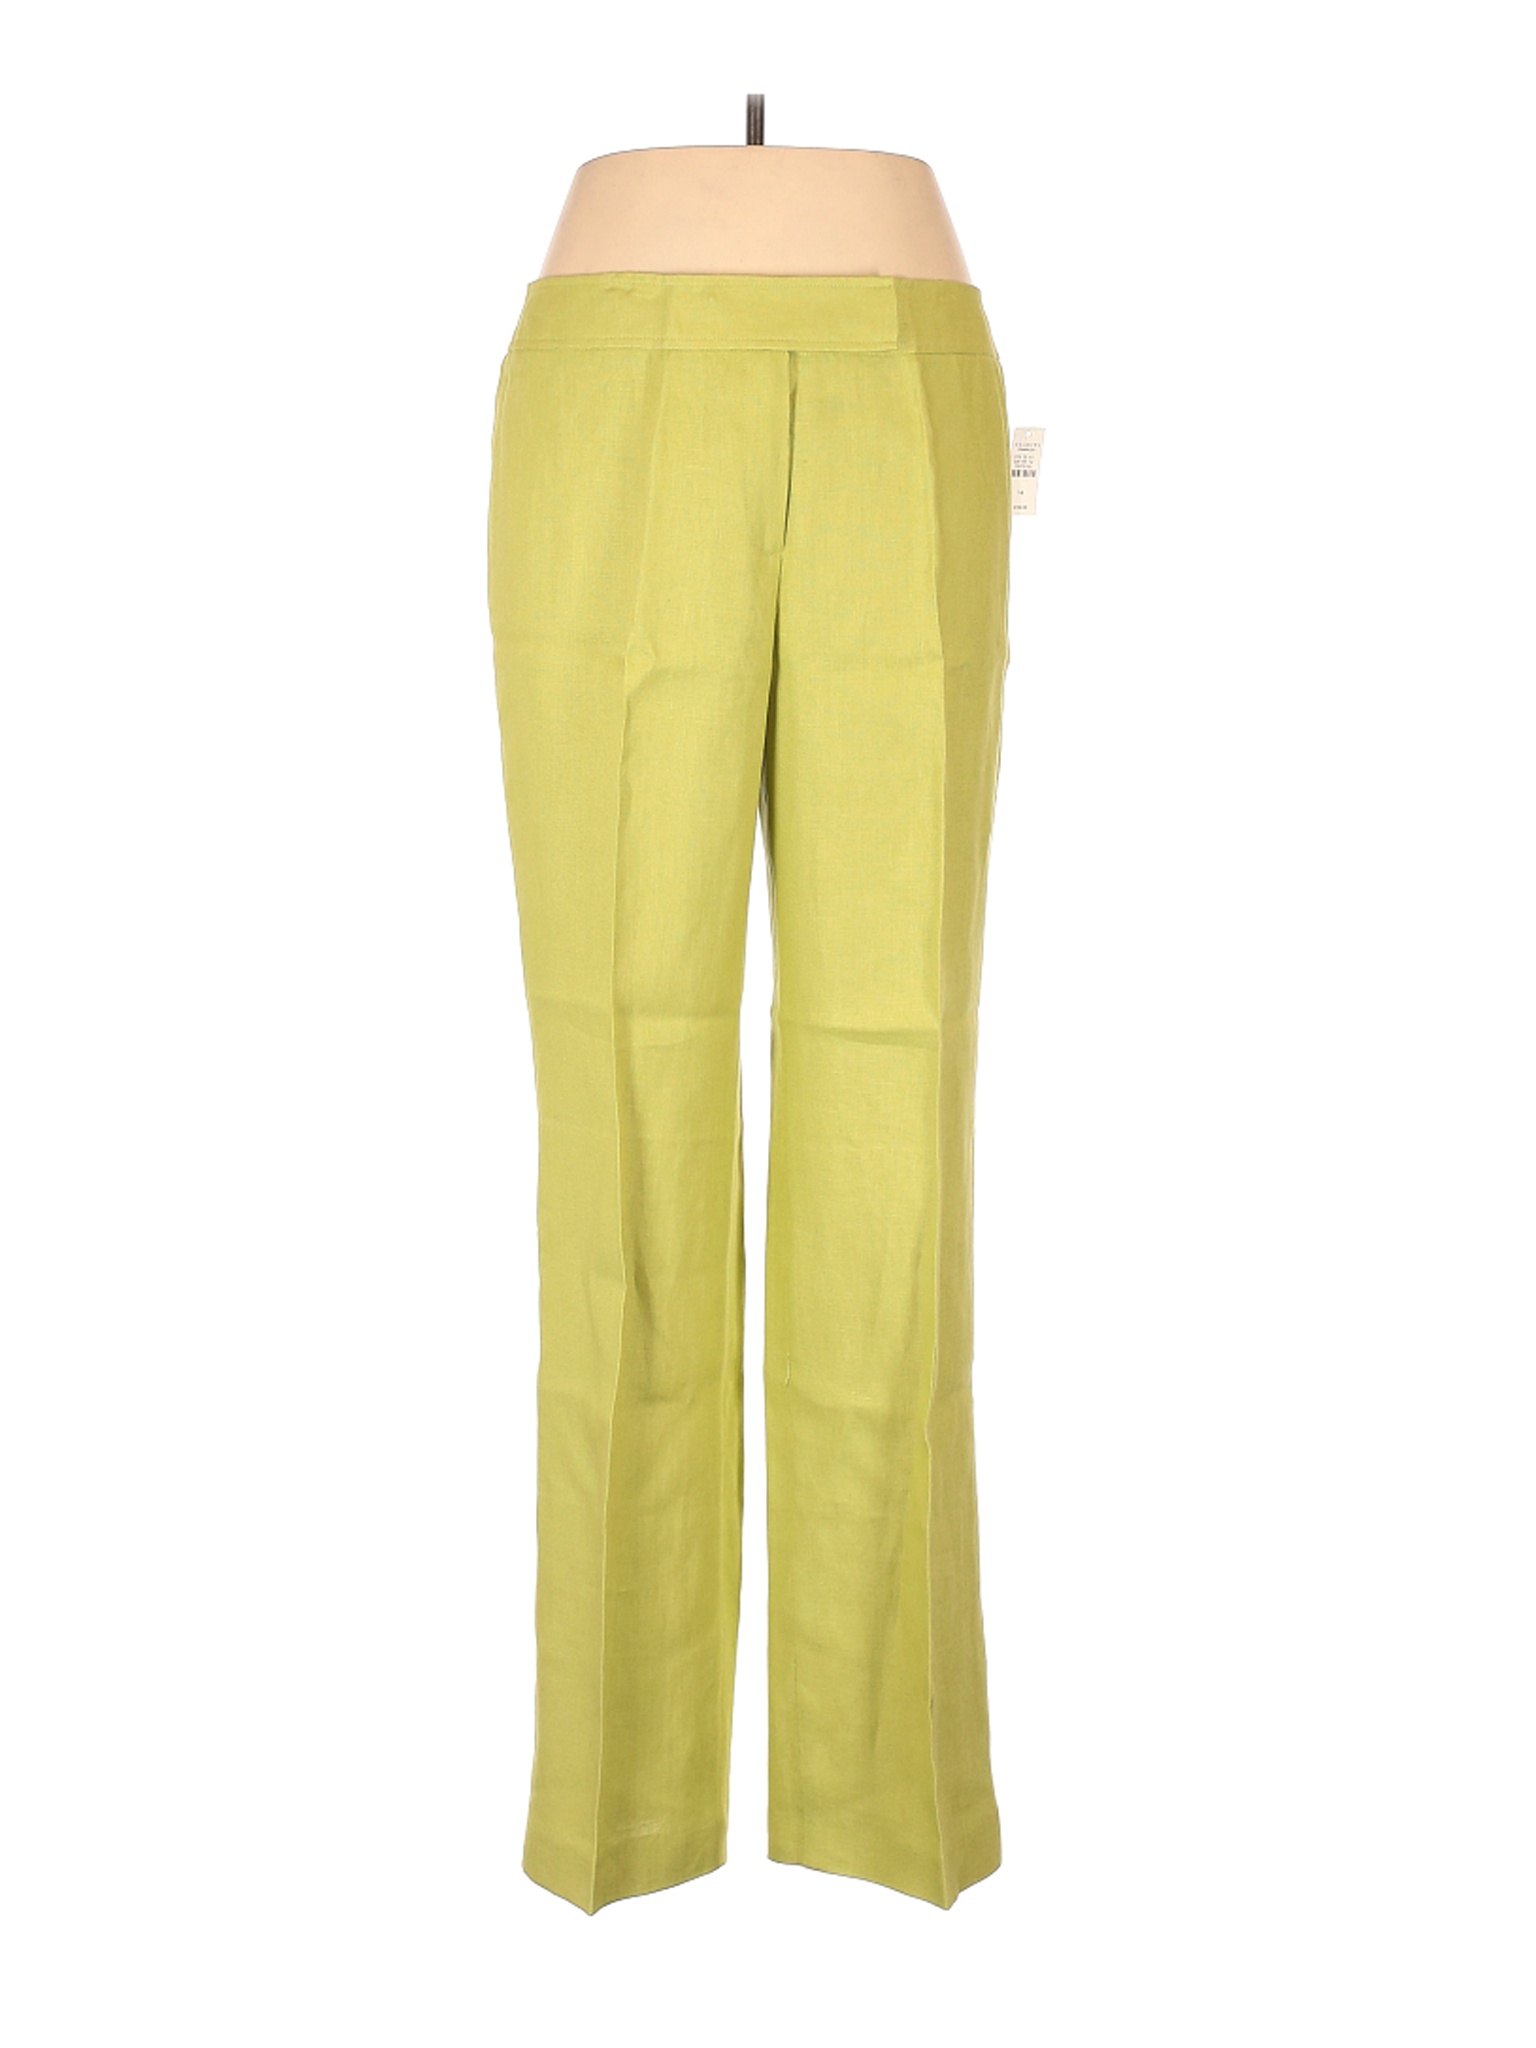 NWT Talbots Women Yellow Linen Pants 14 | eBay